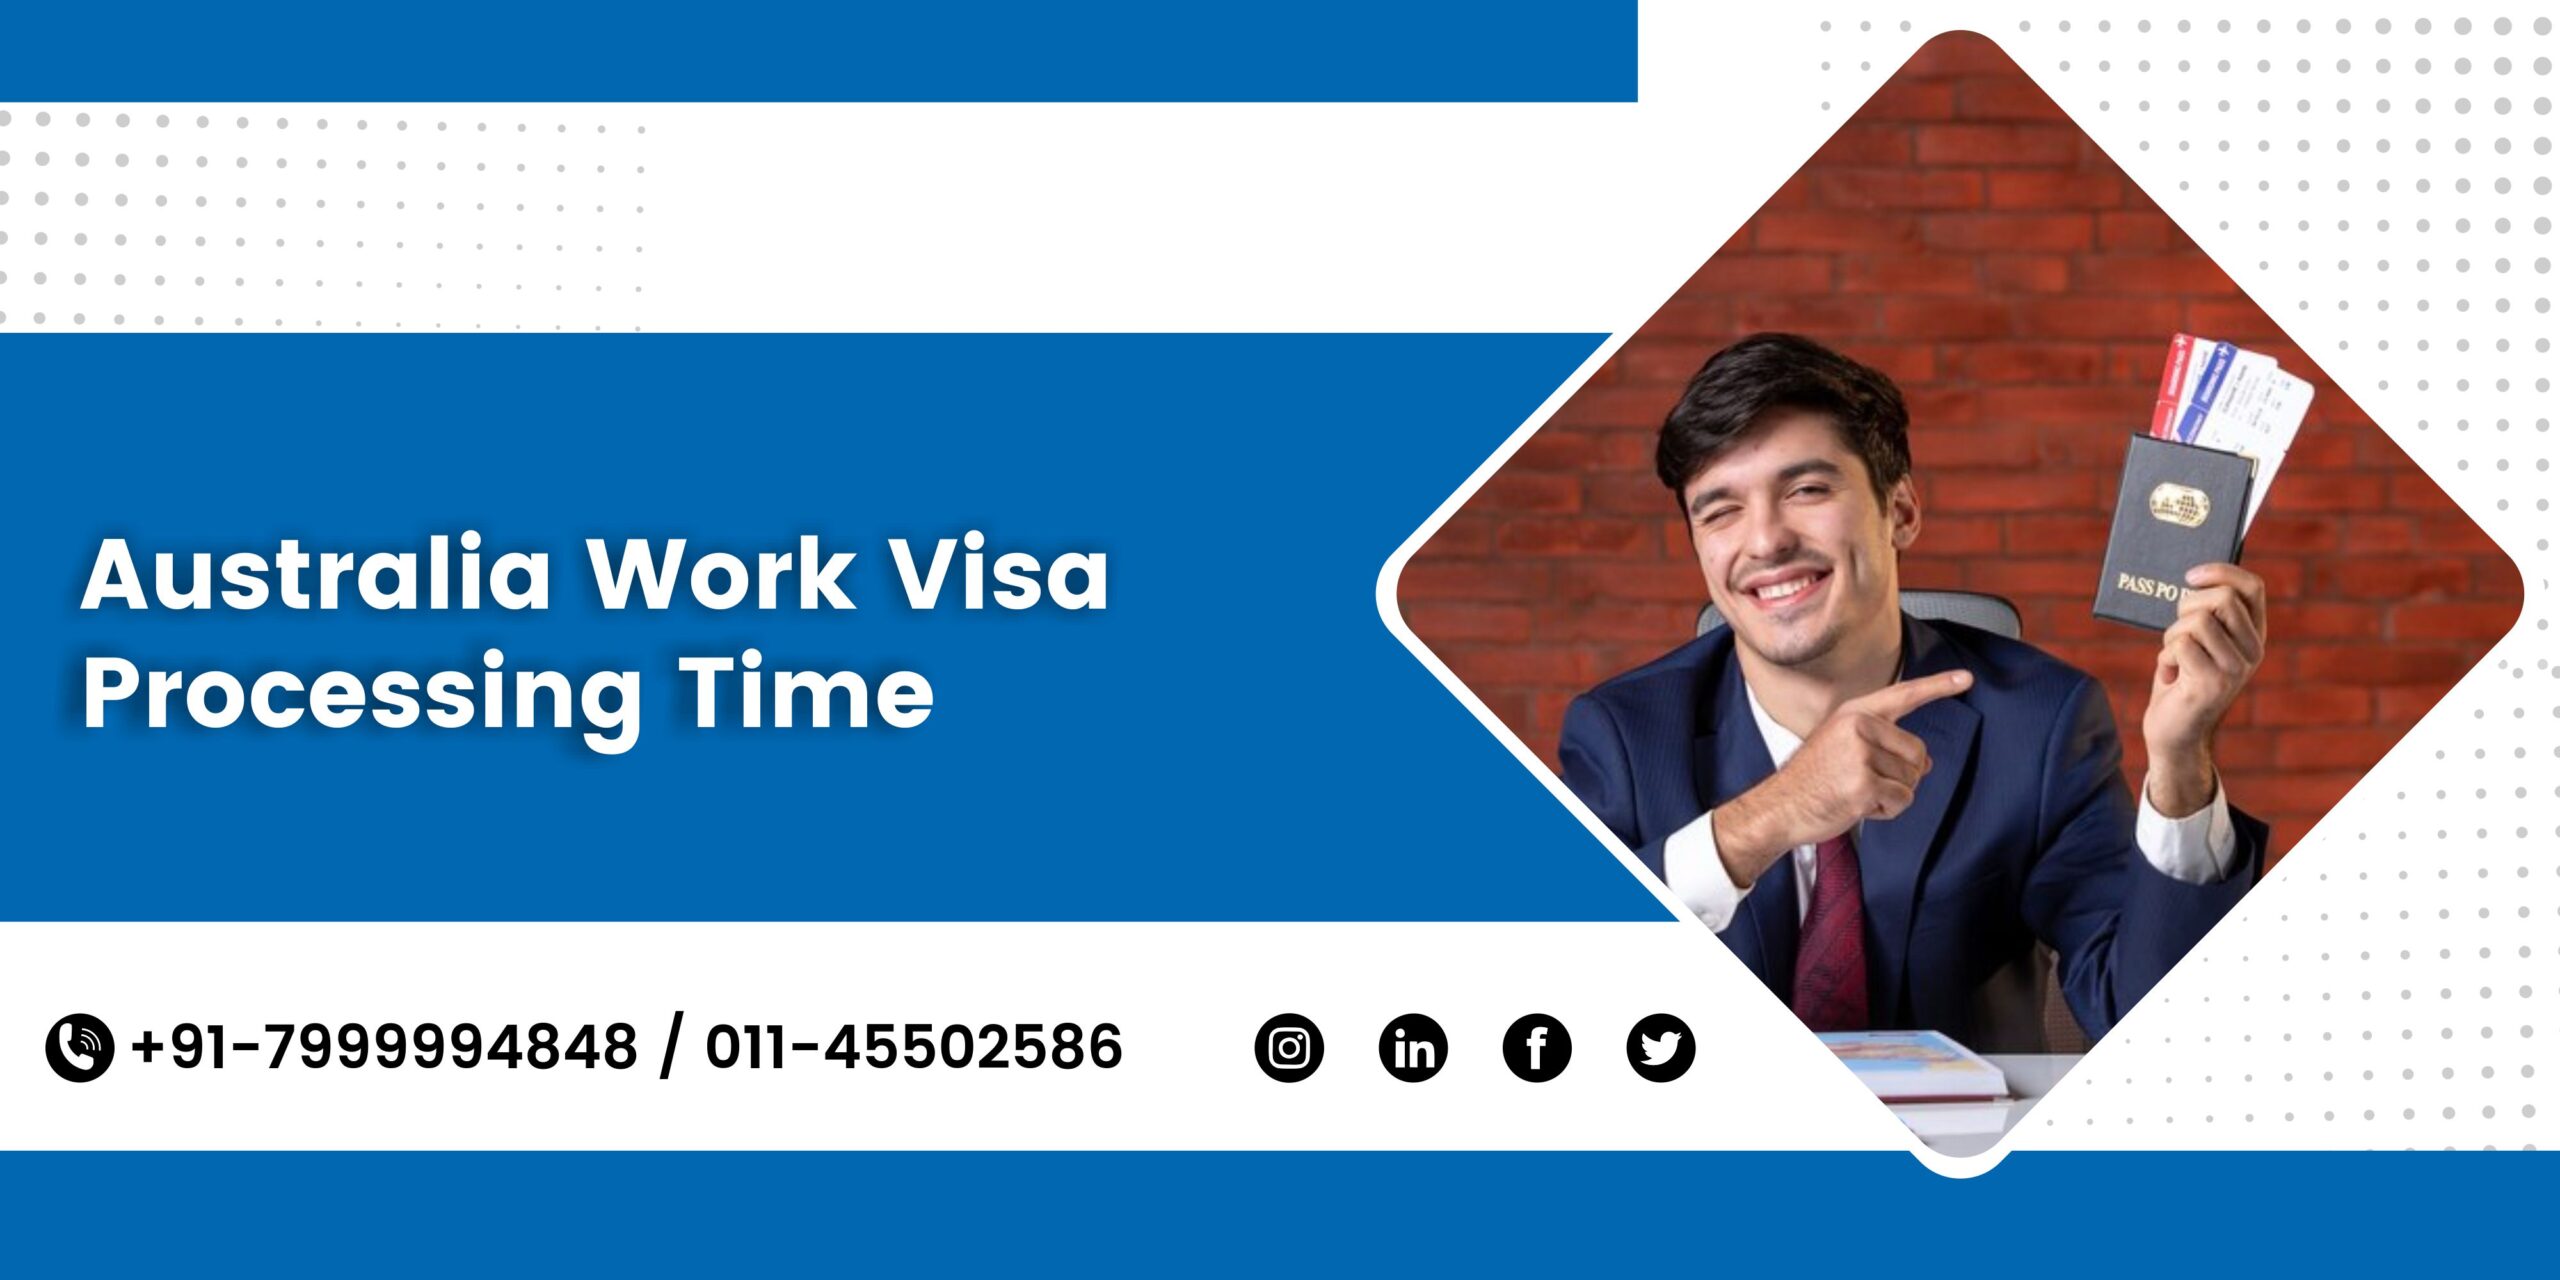 Australia Work Visa Processing Time